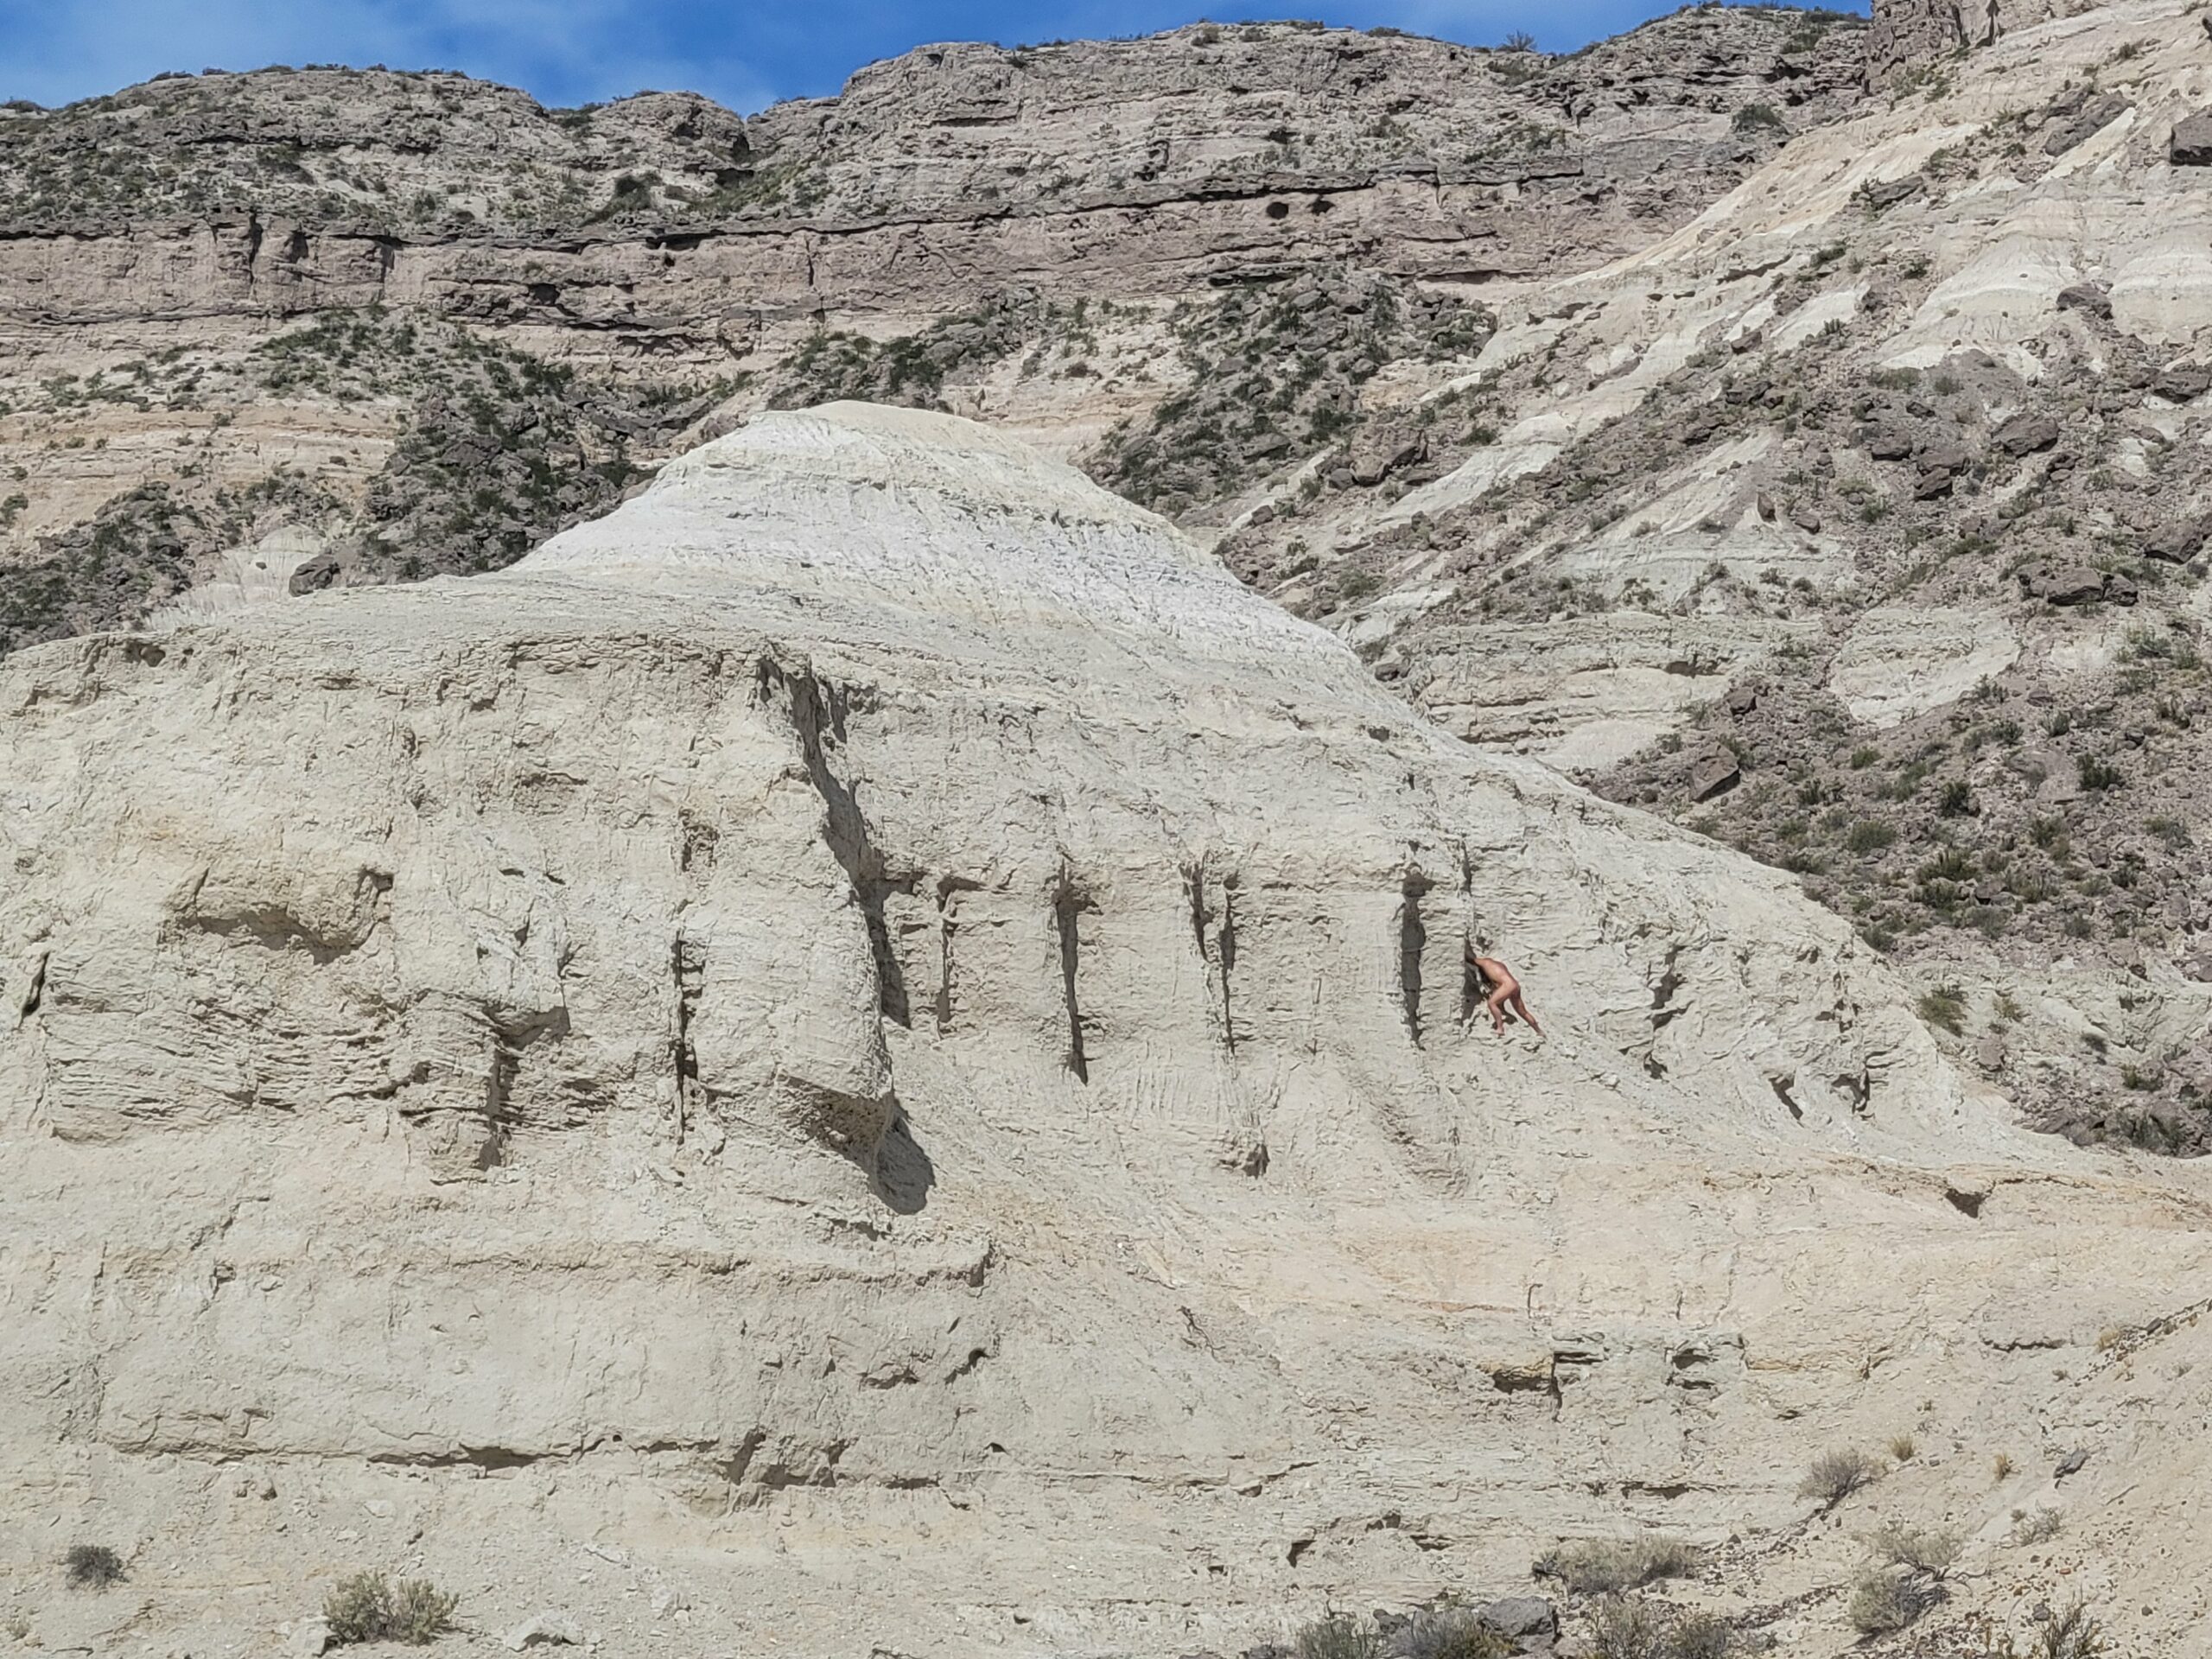 Nude body presses into rock formation in desert landscape.